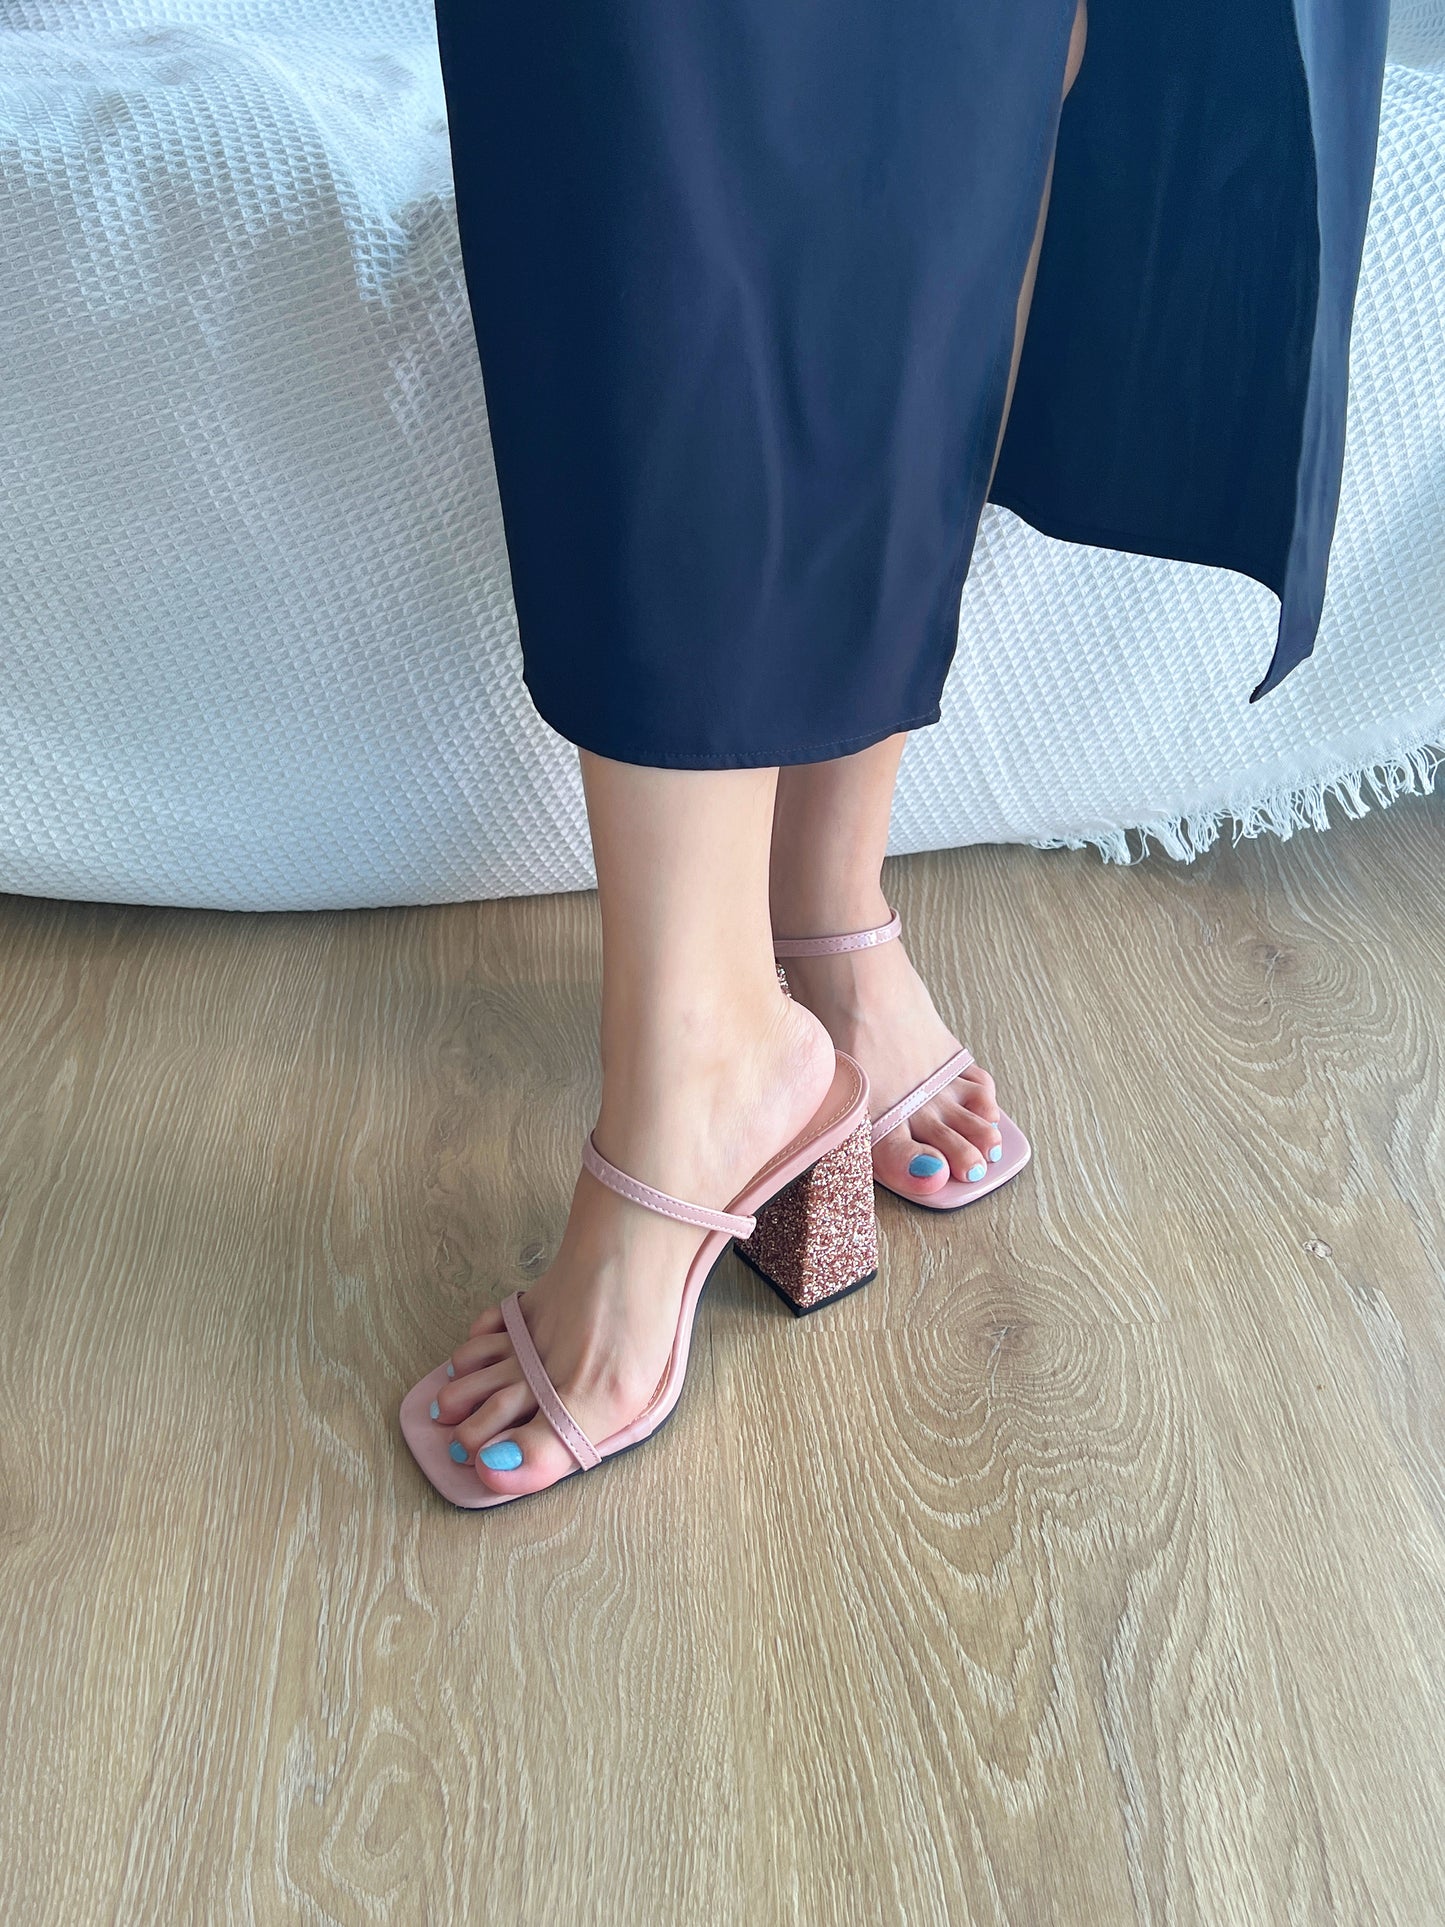 Alexa Glitter Elegant High Heels (Pink)